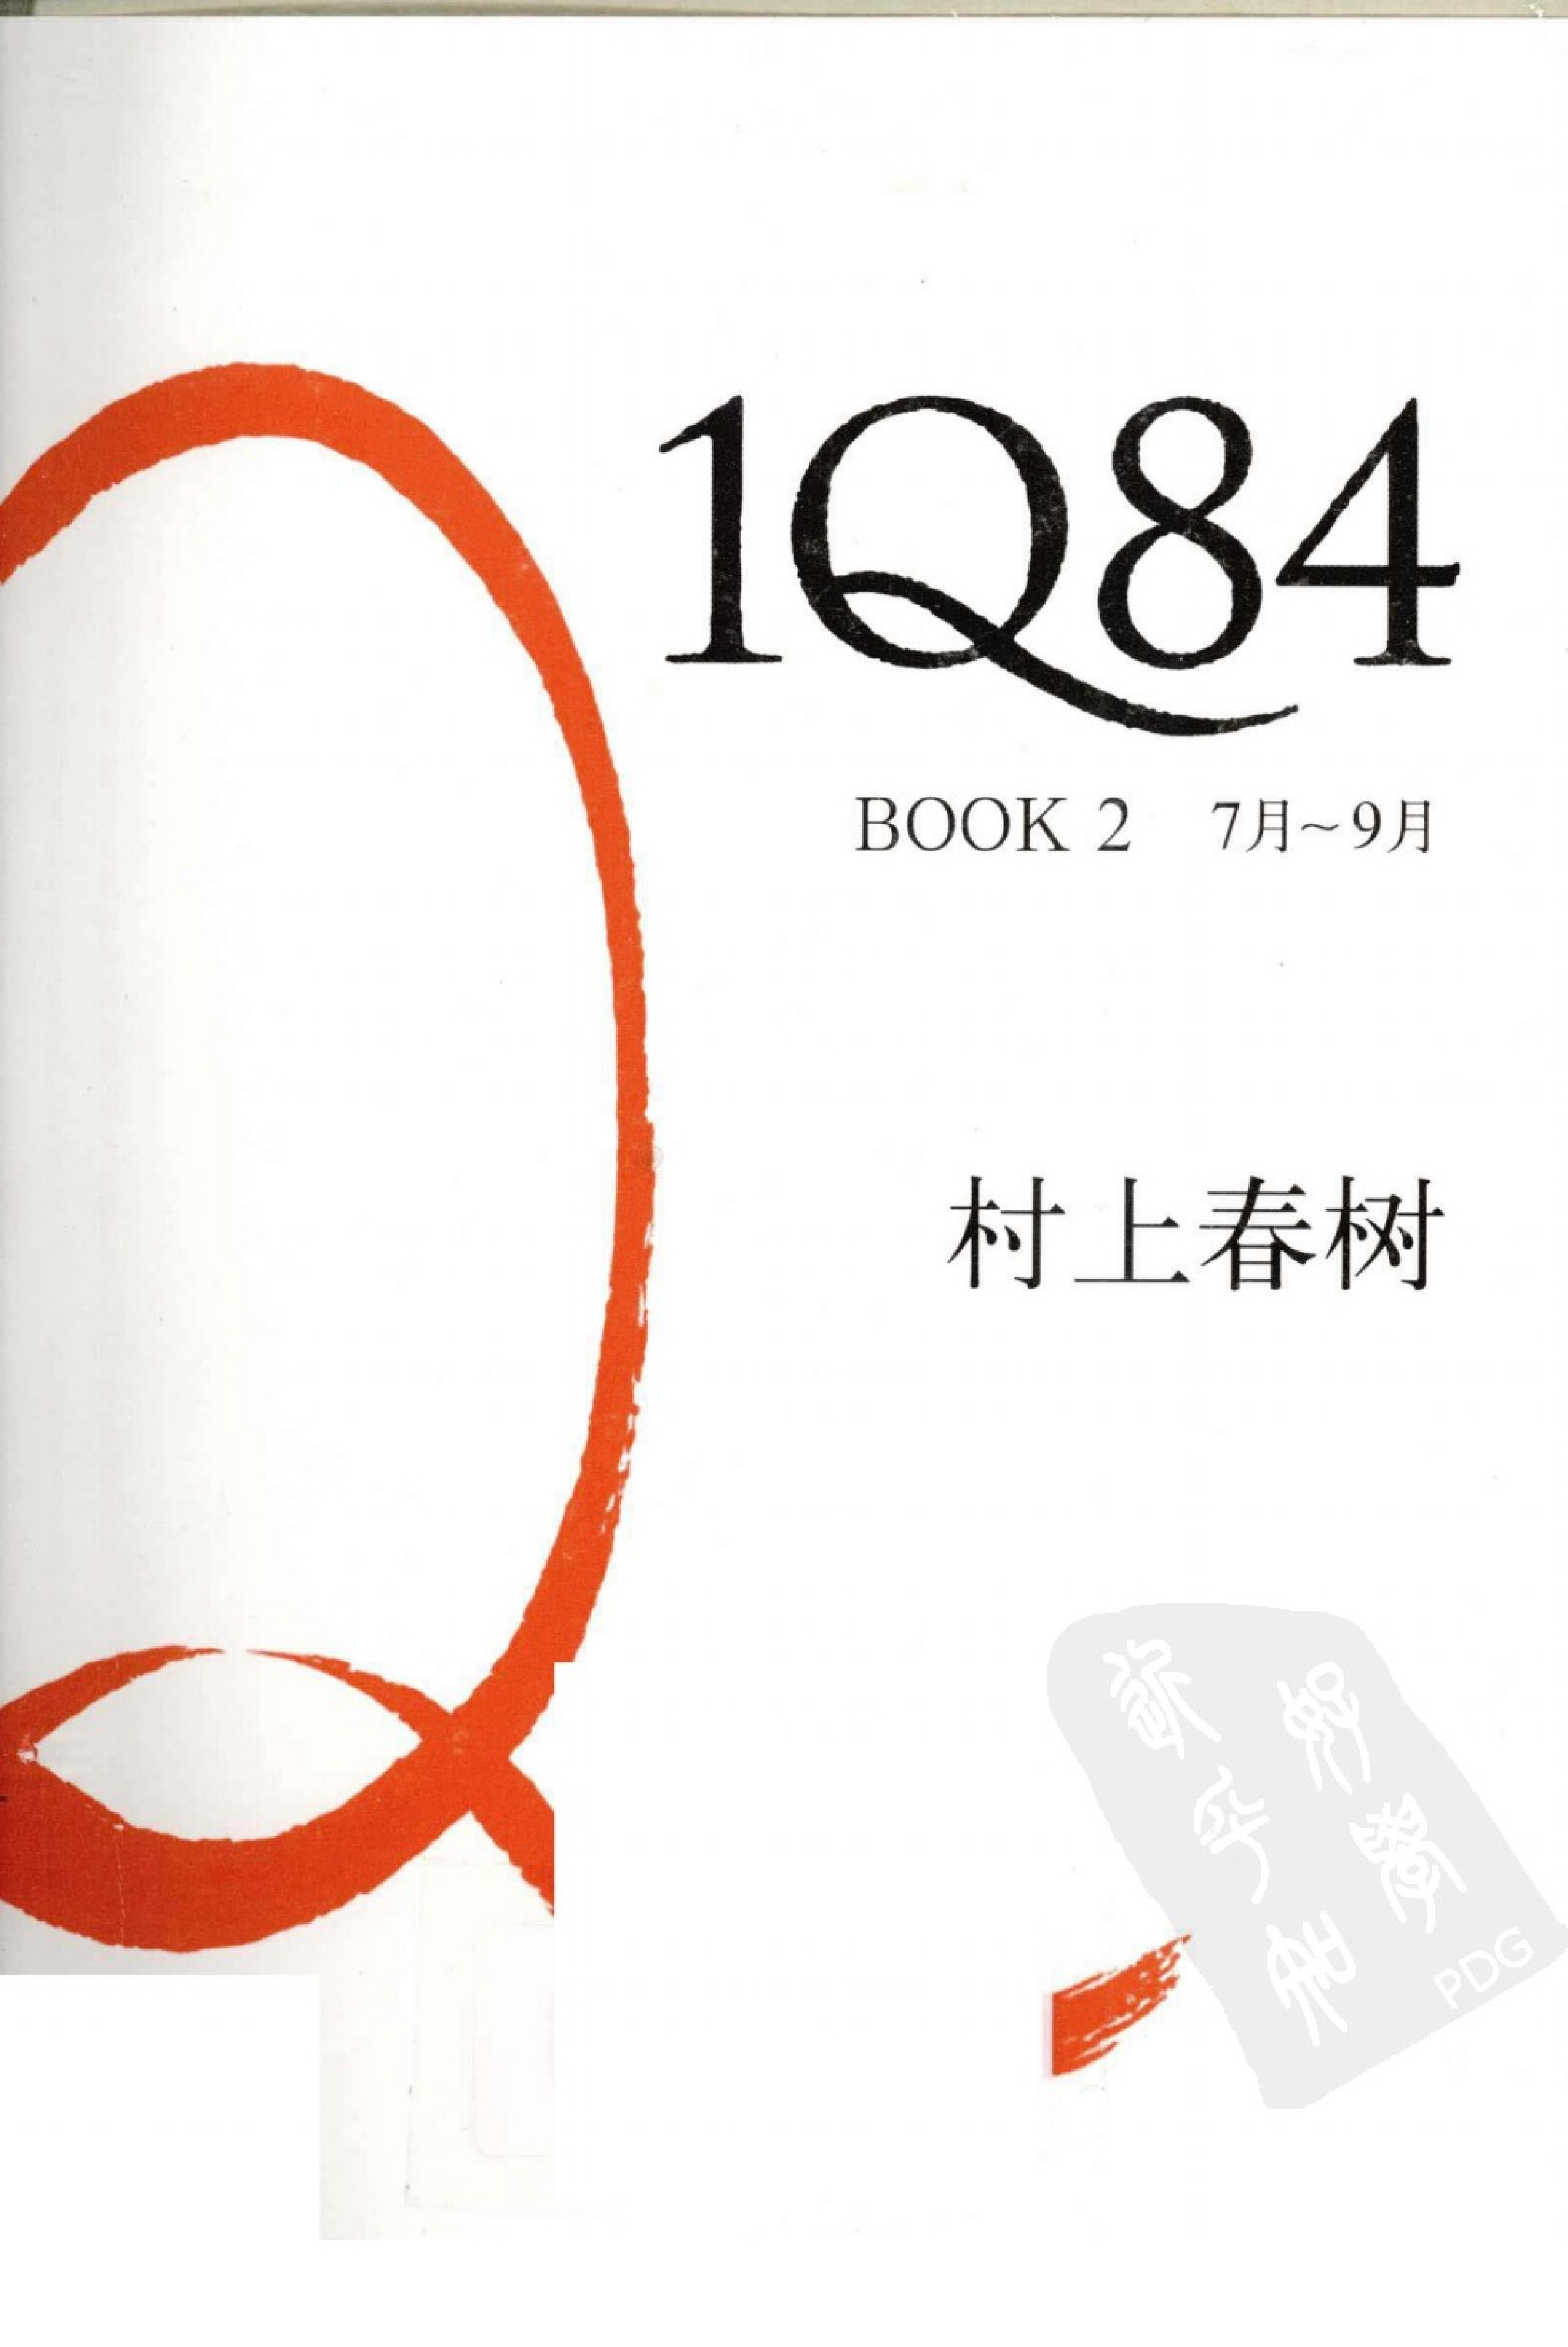 1Q84：BOOK2（7月~9月）[日]村上春树.施小炜译.南海出版公司(2010)